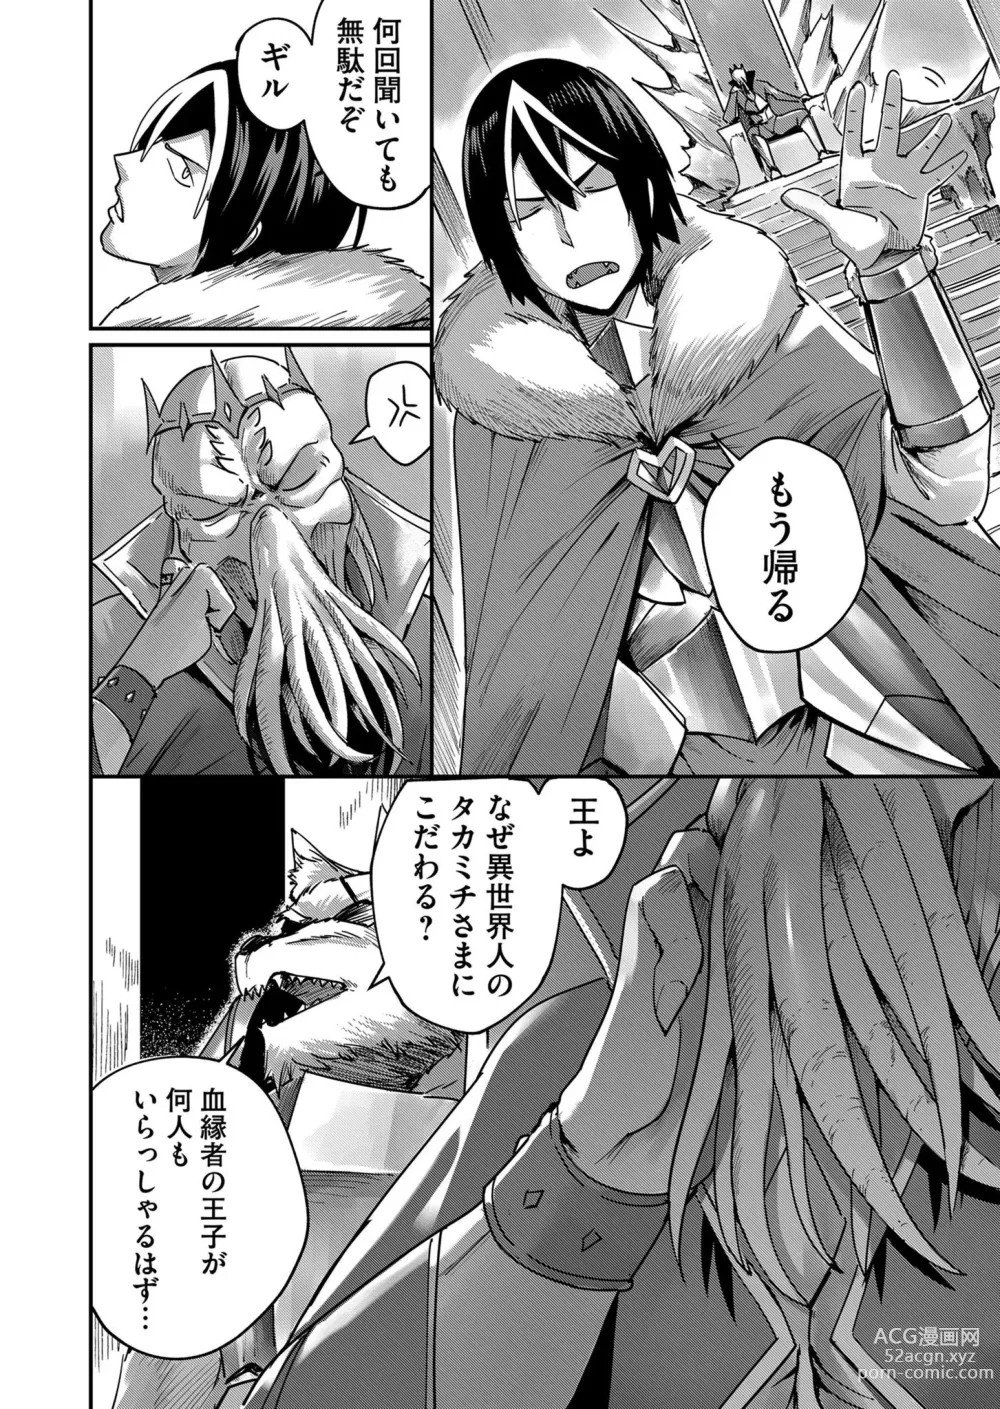 Page 14 of manga Kichiku Eiyuu Vol.01